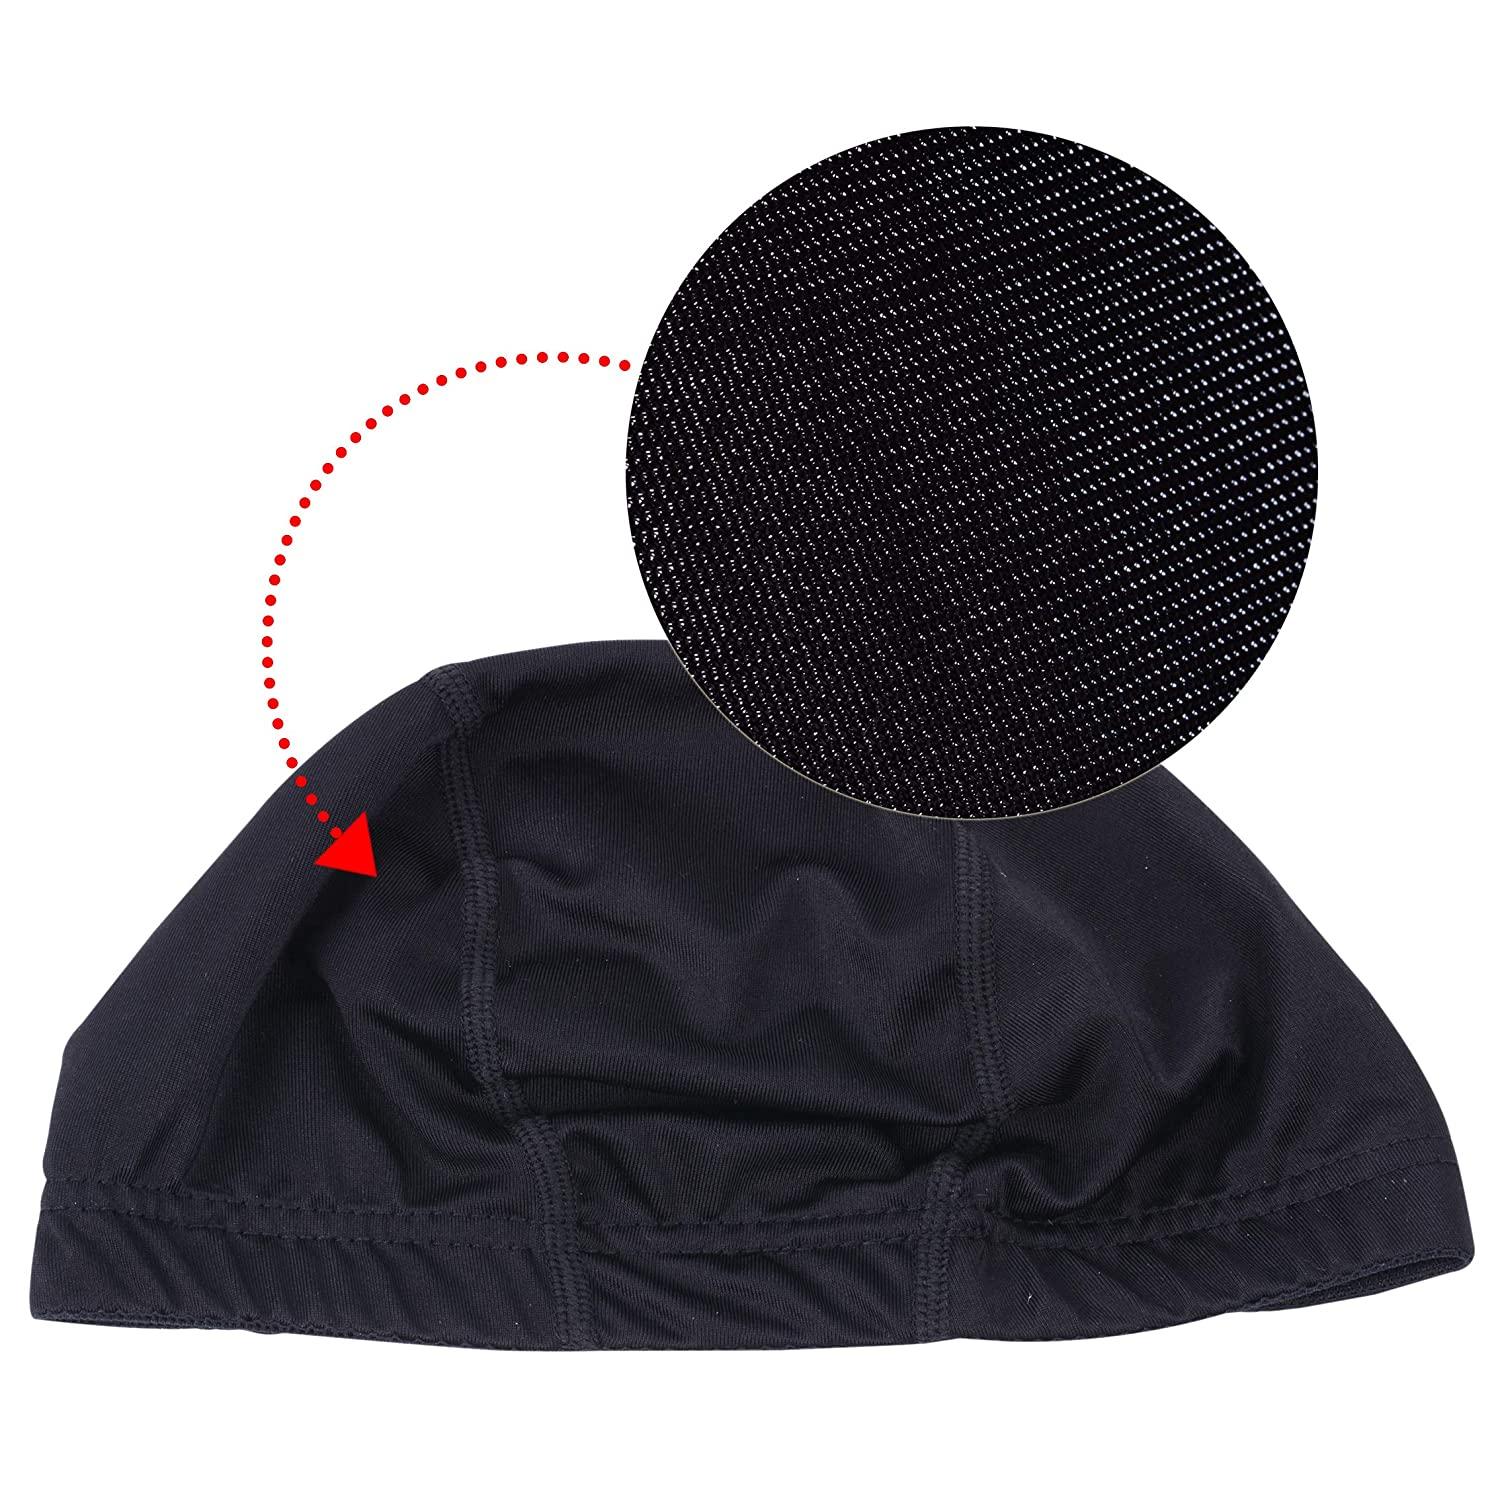 QBWigCollections Dome Wig Cap (Black) Medium